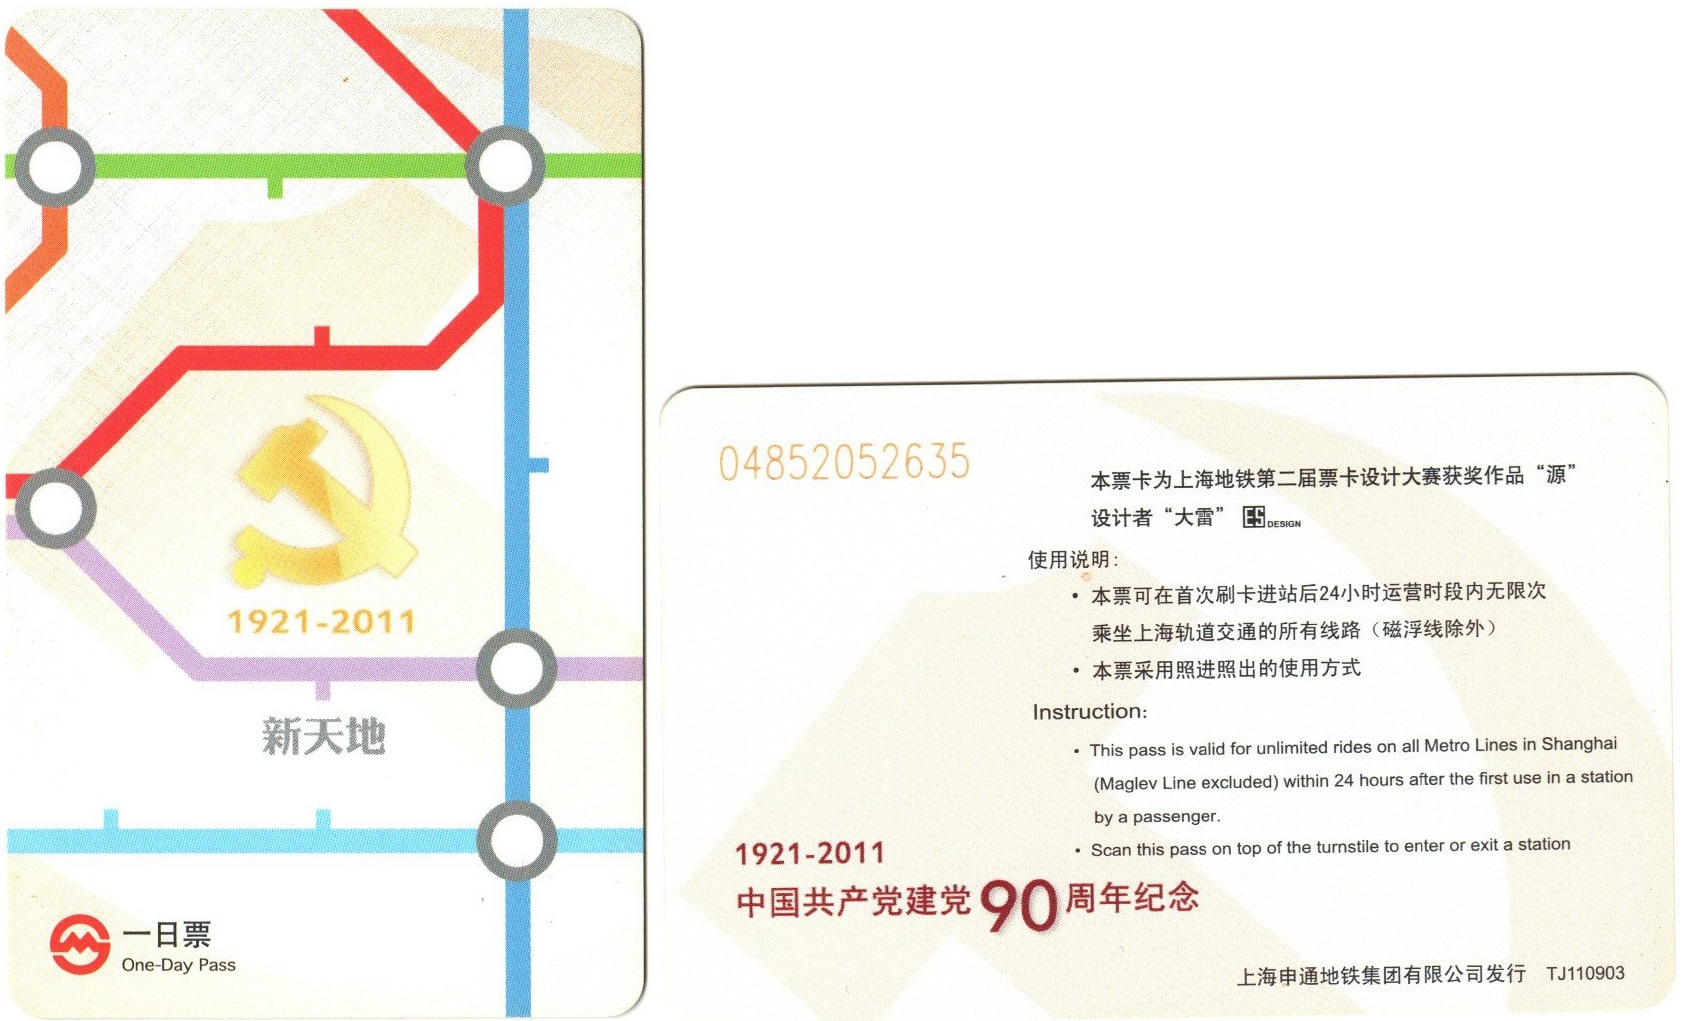 T5056, Shanghai Metro Card (Subway Ticket), One-Day, 90th Anniv. 2011